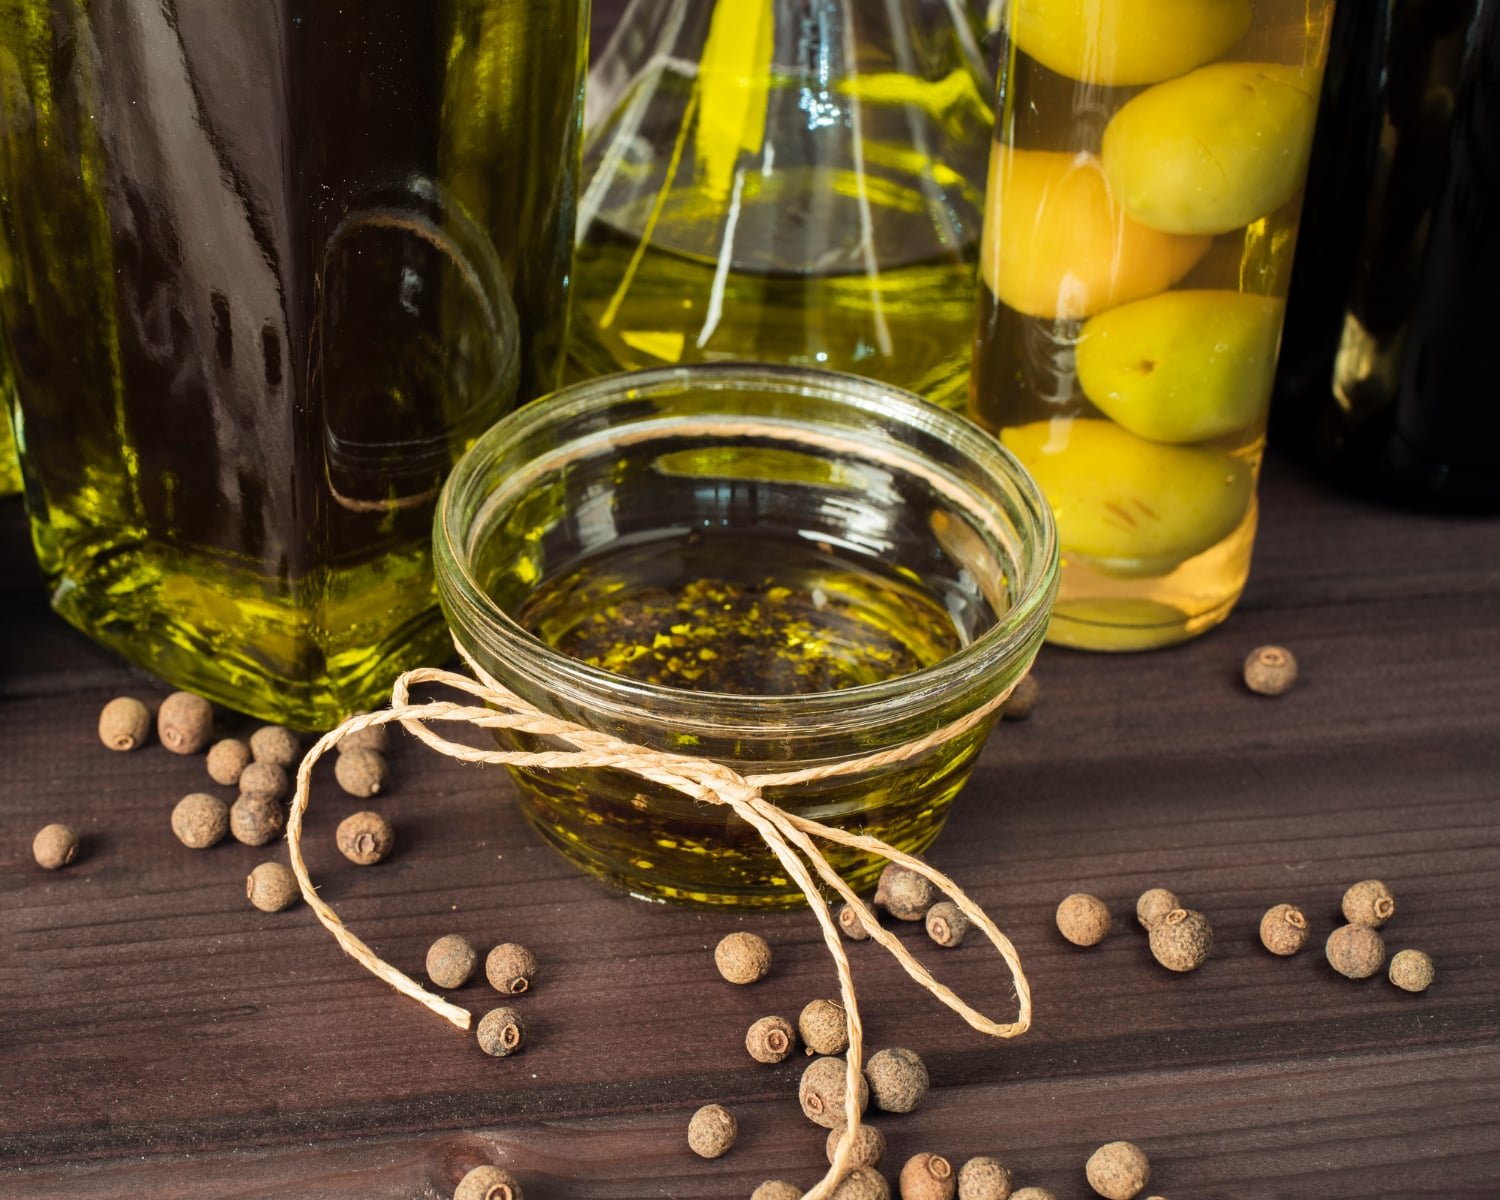 Enjoy Fresh Olive Oil With CORTO’s Artisanal Olive Oils